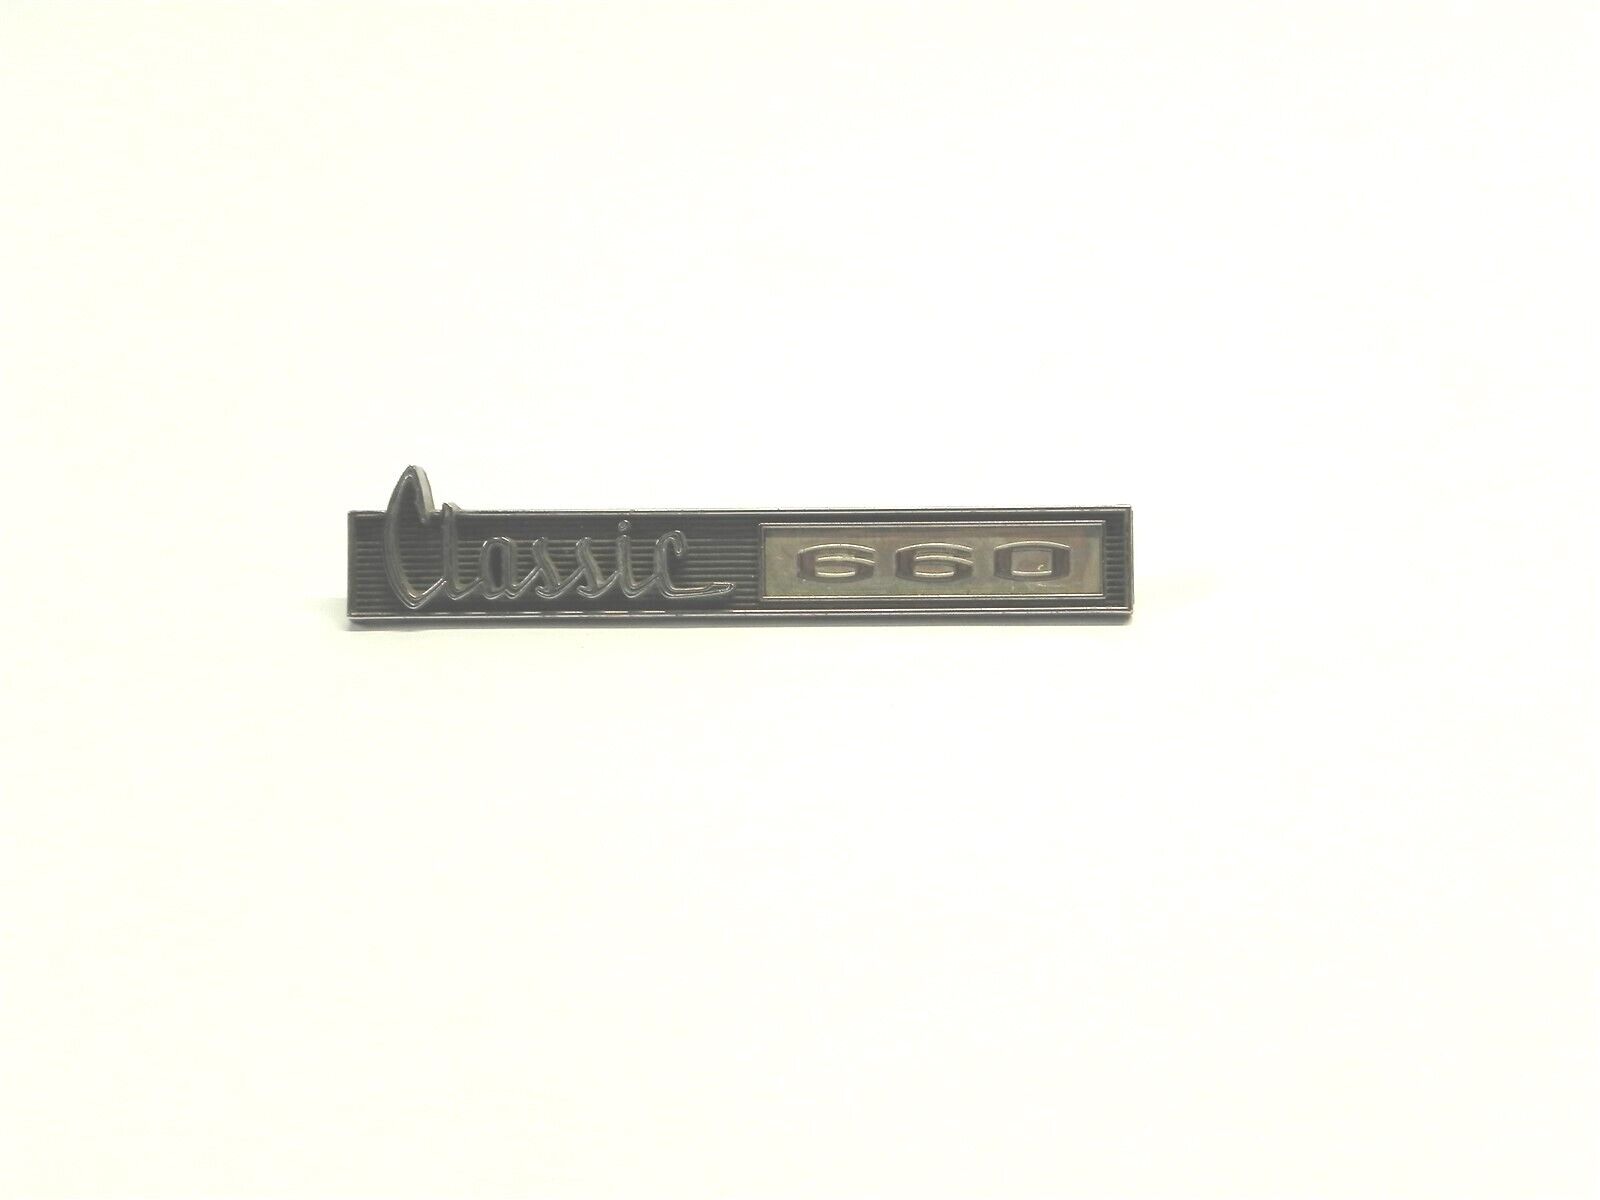 VINTAGE 1963-1964-1965 AMC RAMBLER CLASSIC 660 GLOVEBOX EMBLEM BADGE #3517107 